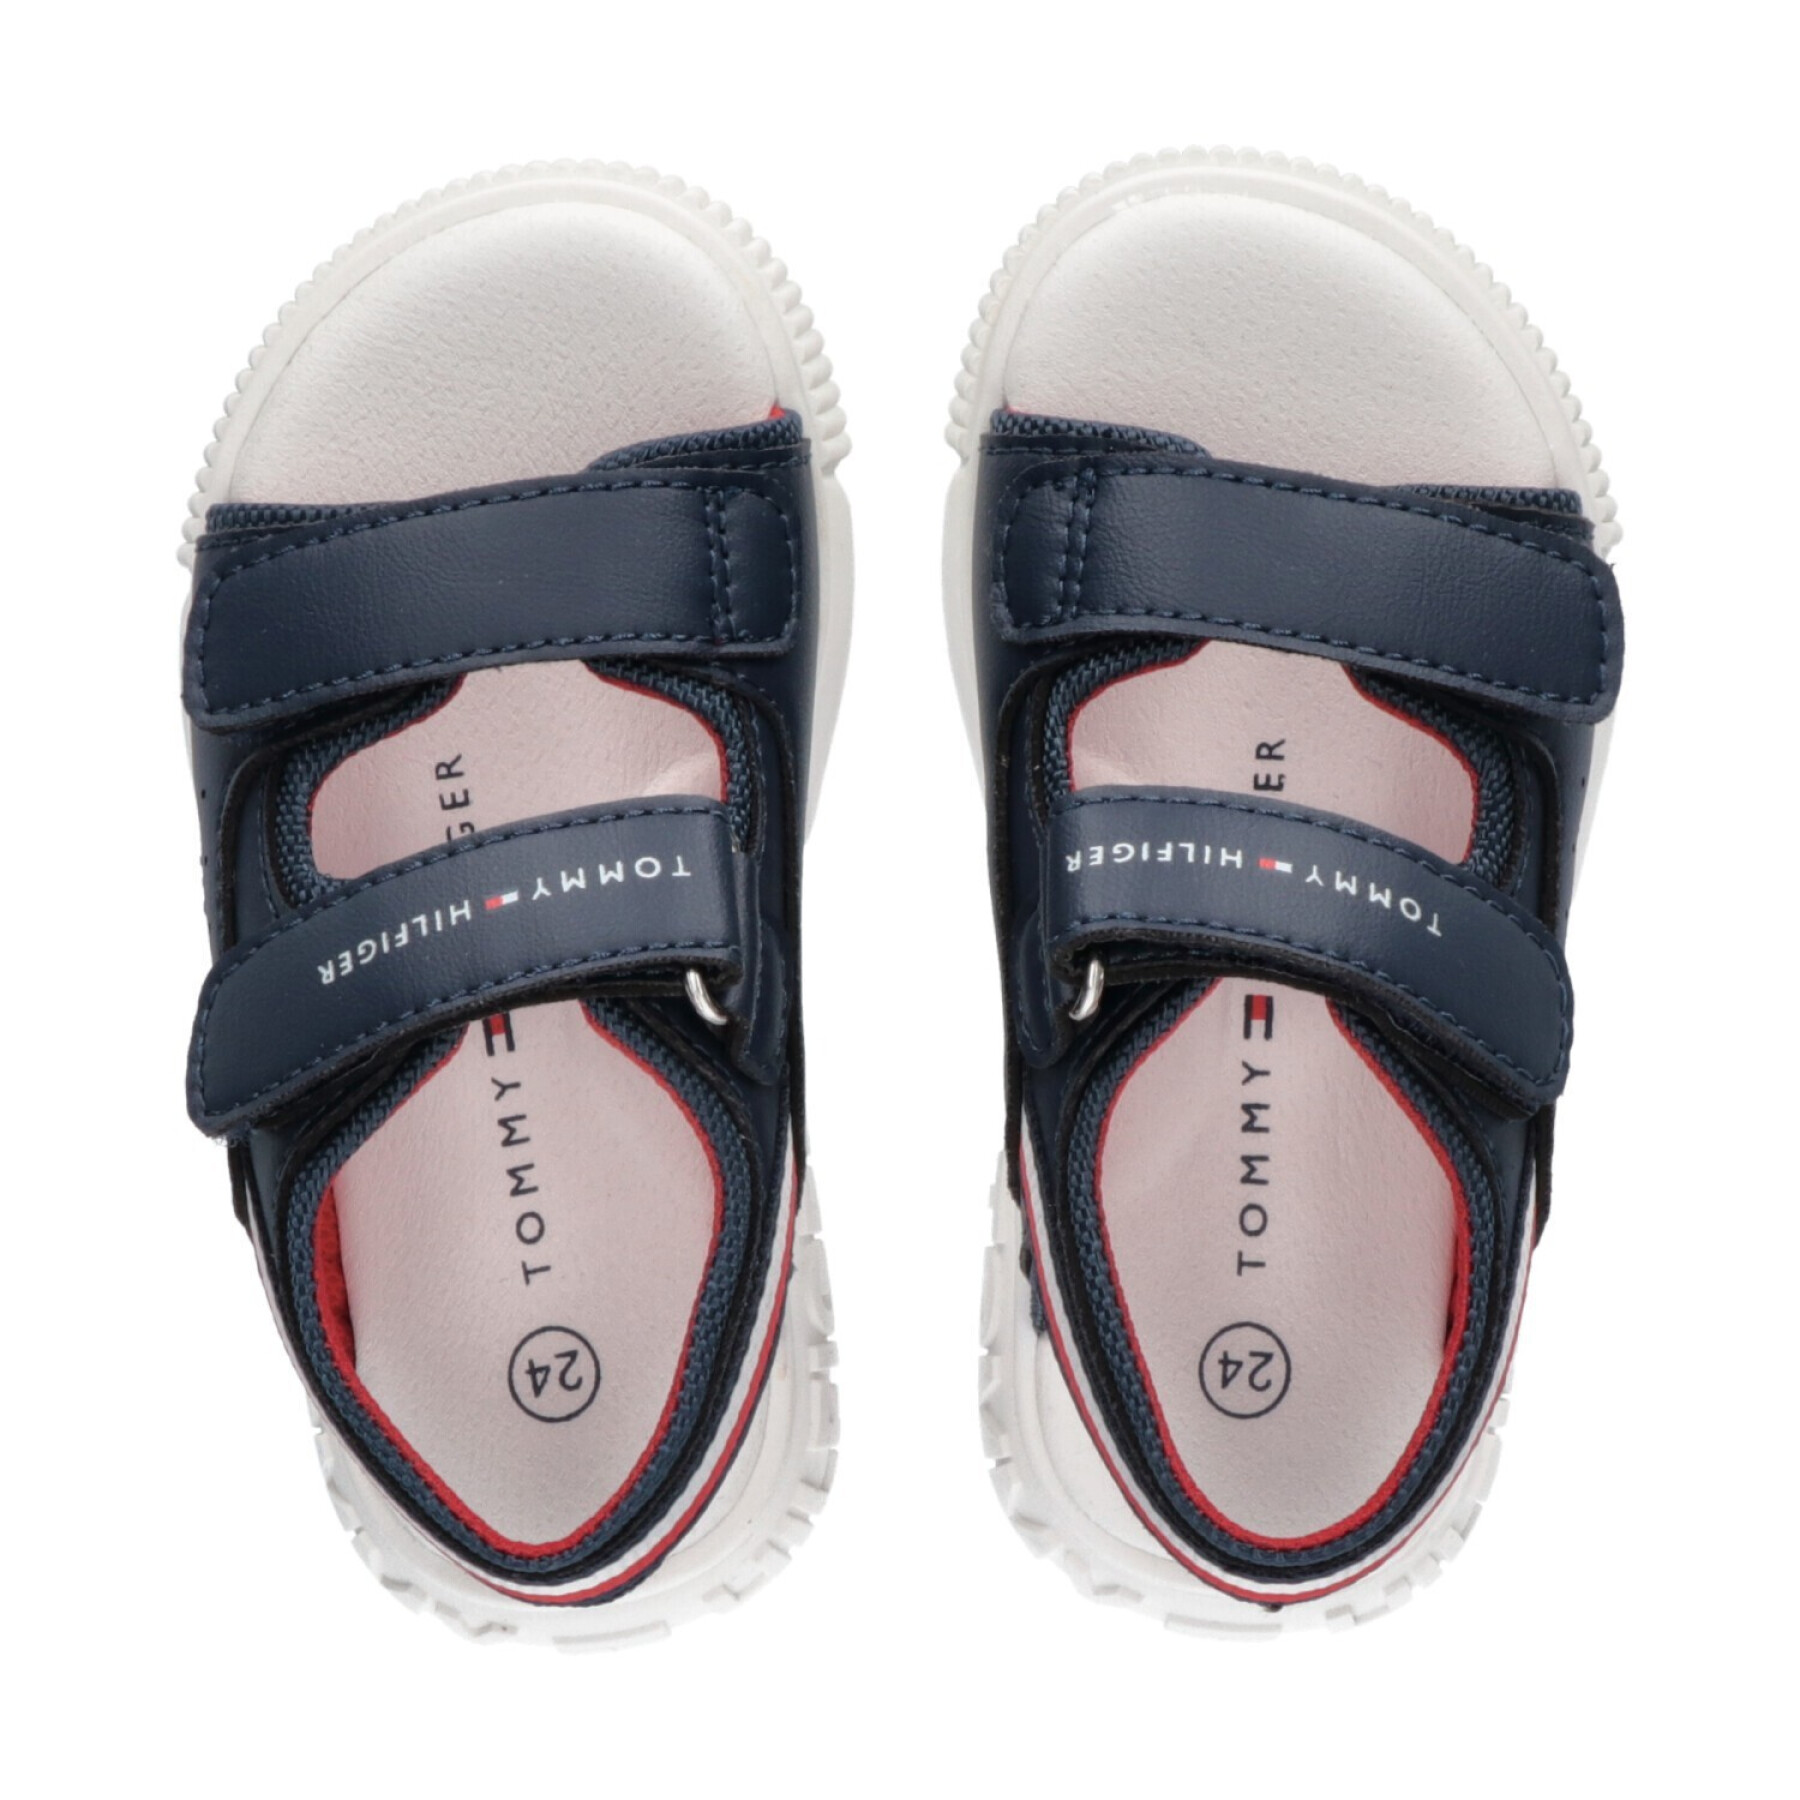 Velcro baby sandals Tommy Hilfiger